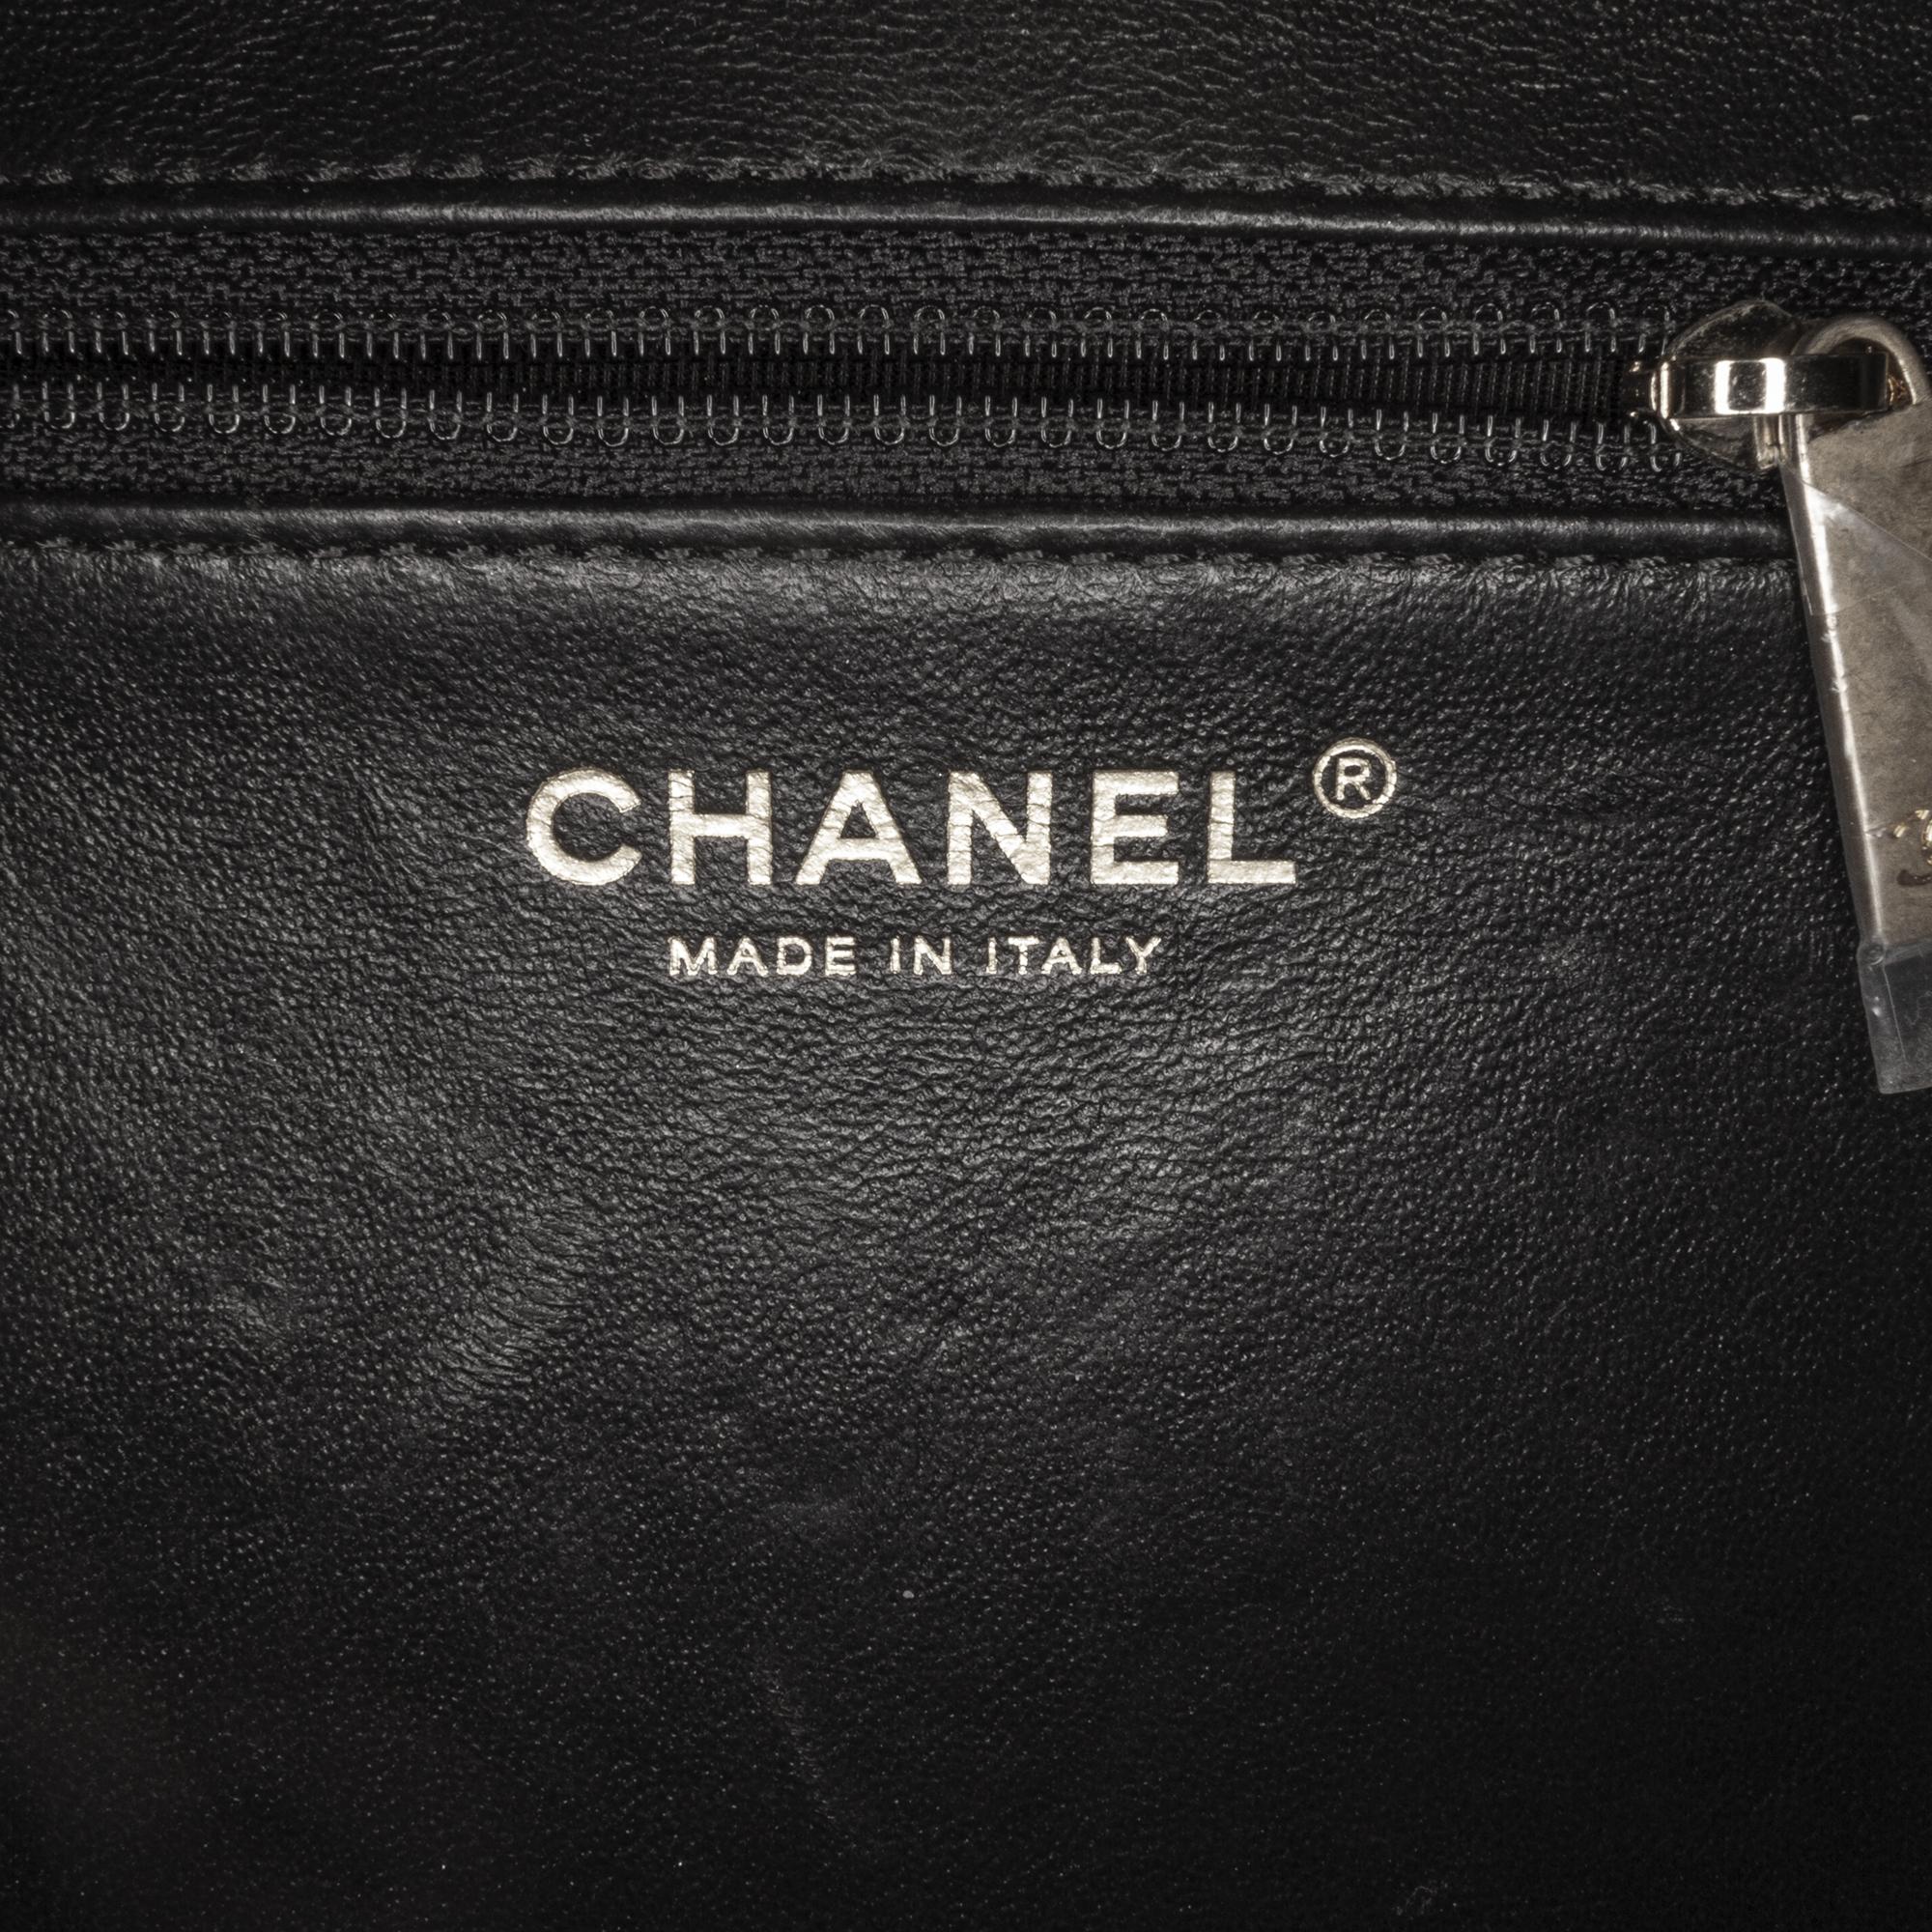 Chanel Beige/Brown Large Caviar CC Filigree Vanity Bag